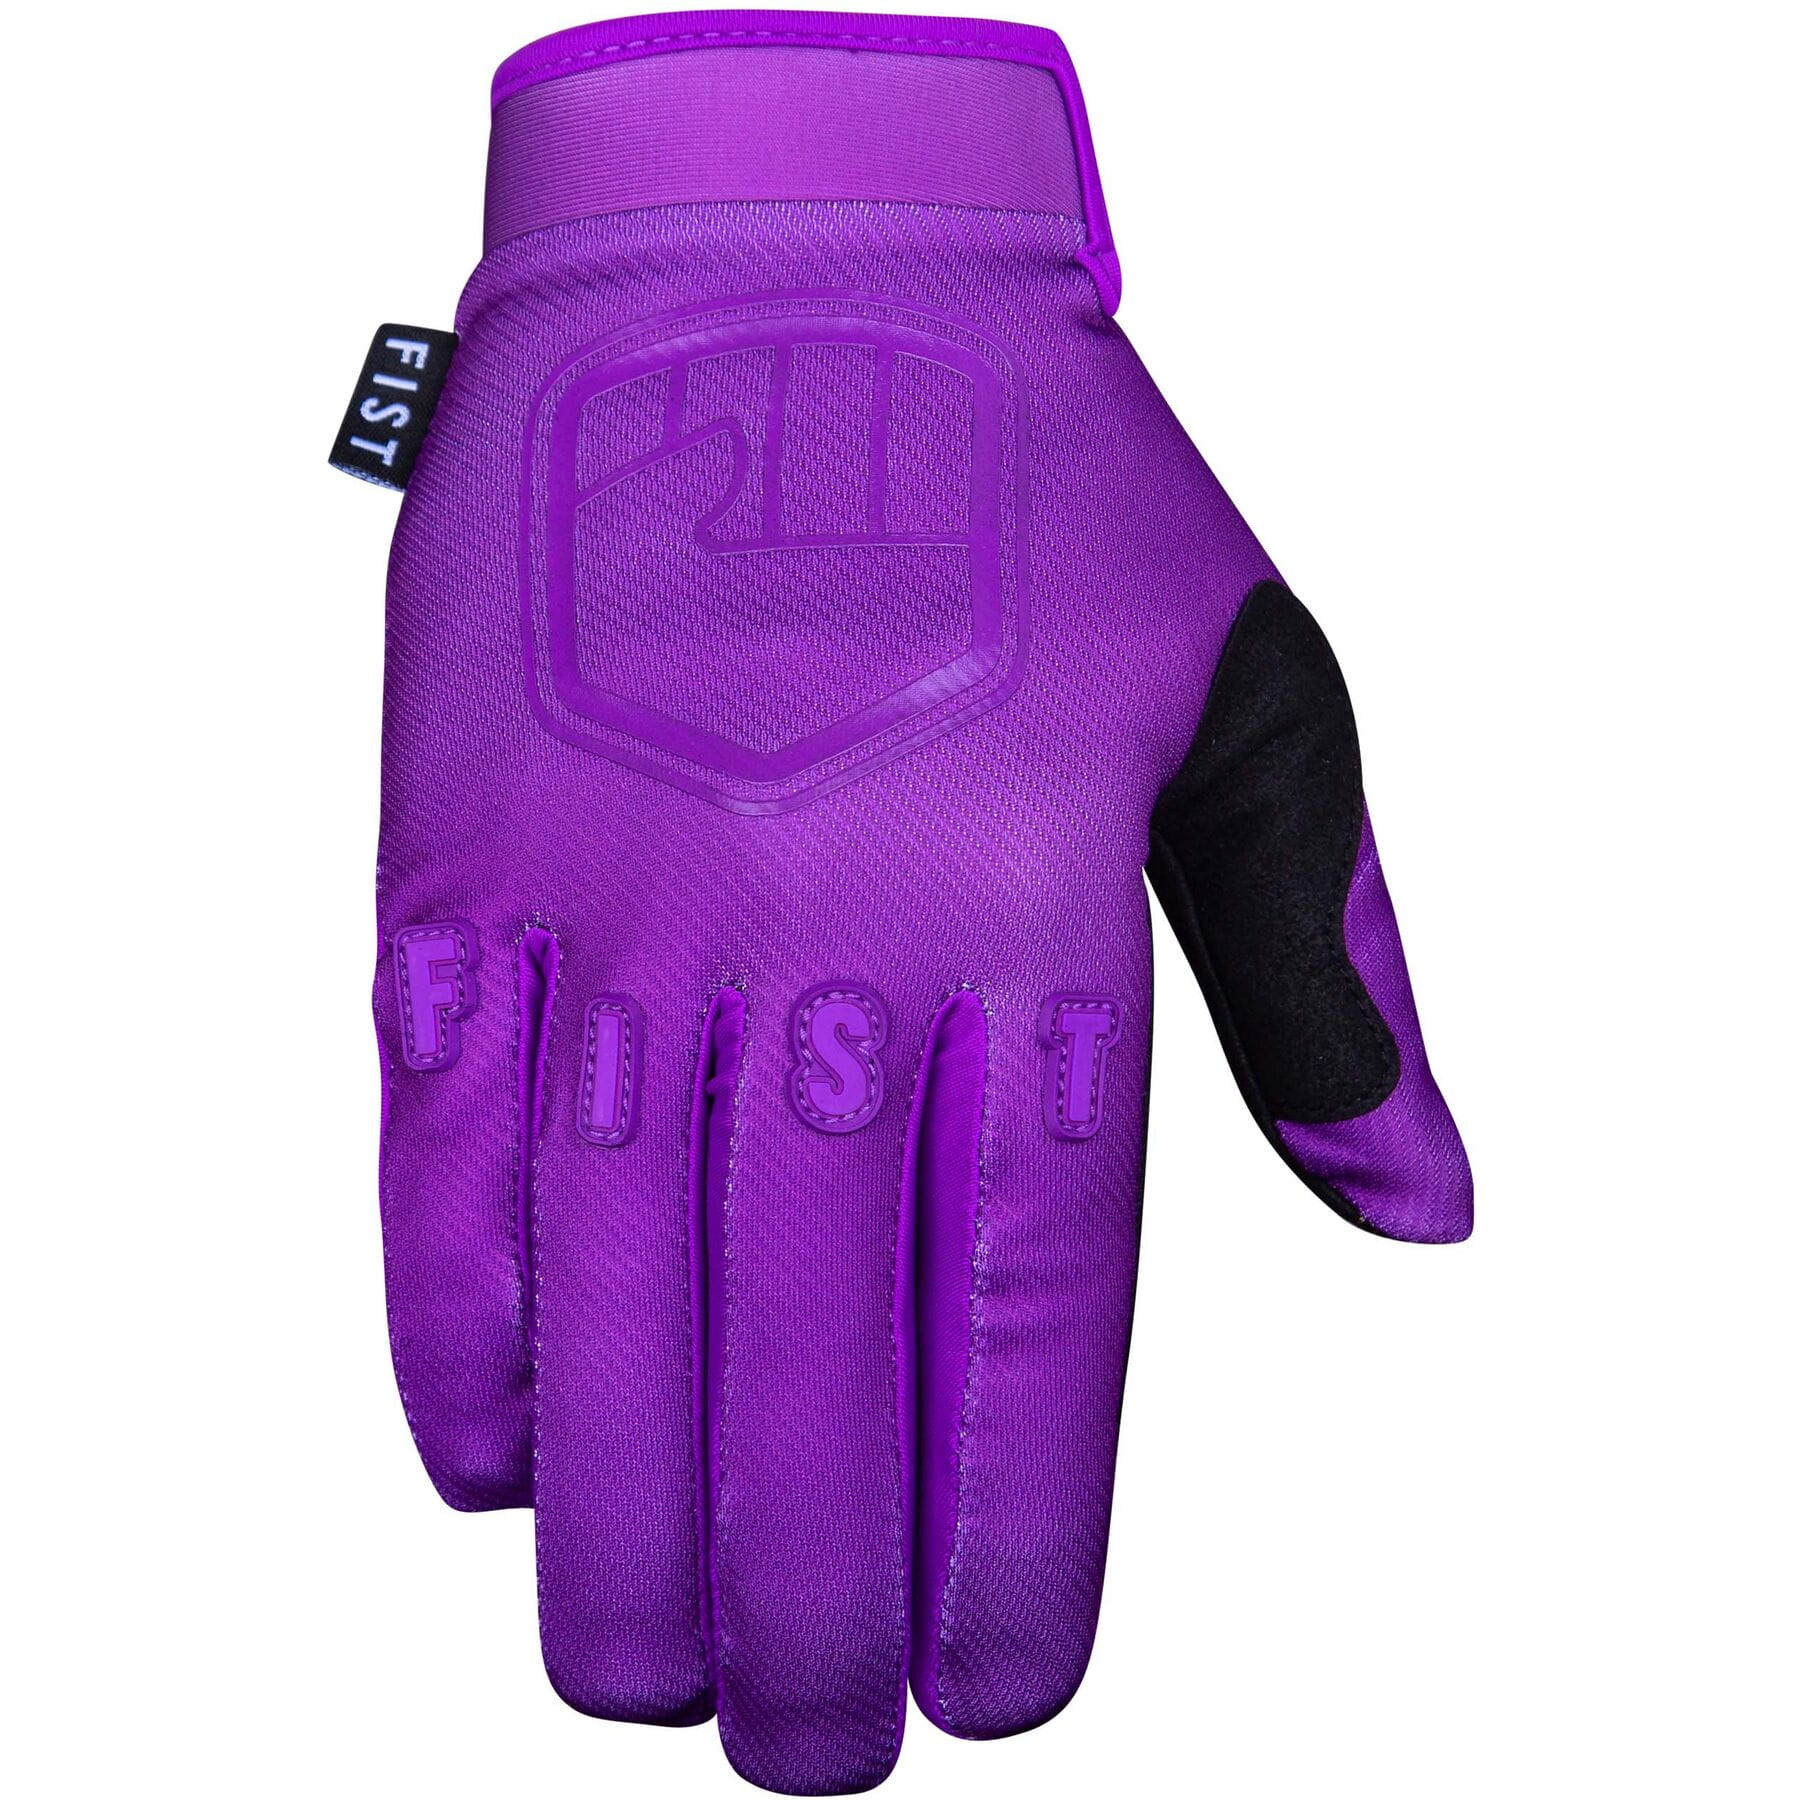 Fist Gloves Stocker Collection Purple